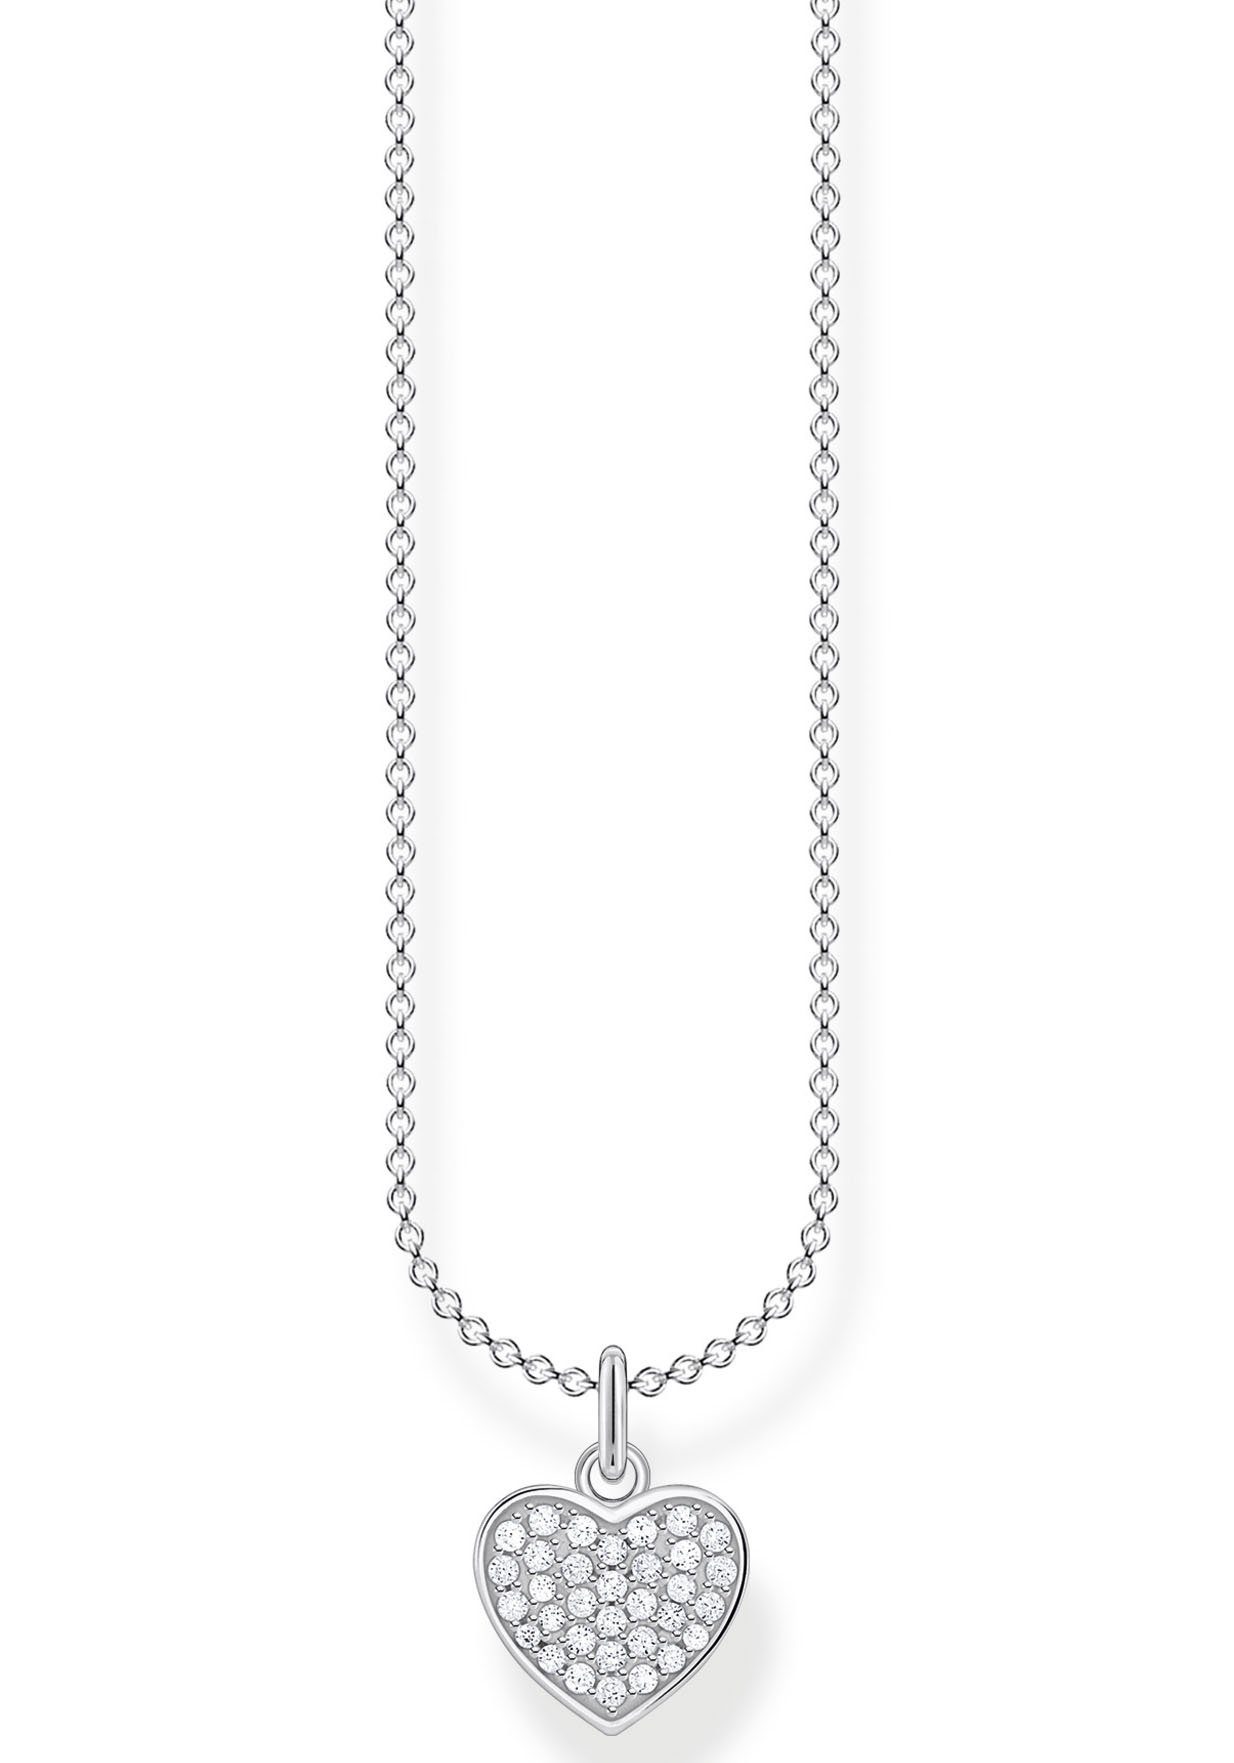 THOMAS SABO Kette mit Anhänger Herz pavé silber, KE2046-051-14-L45V, mit Zirkonia (synth) | Silberketten